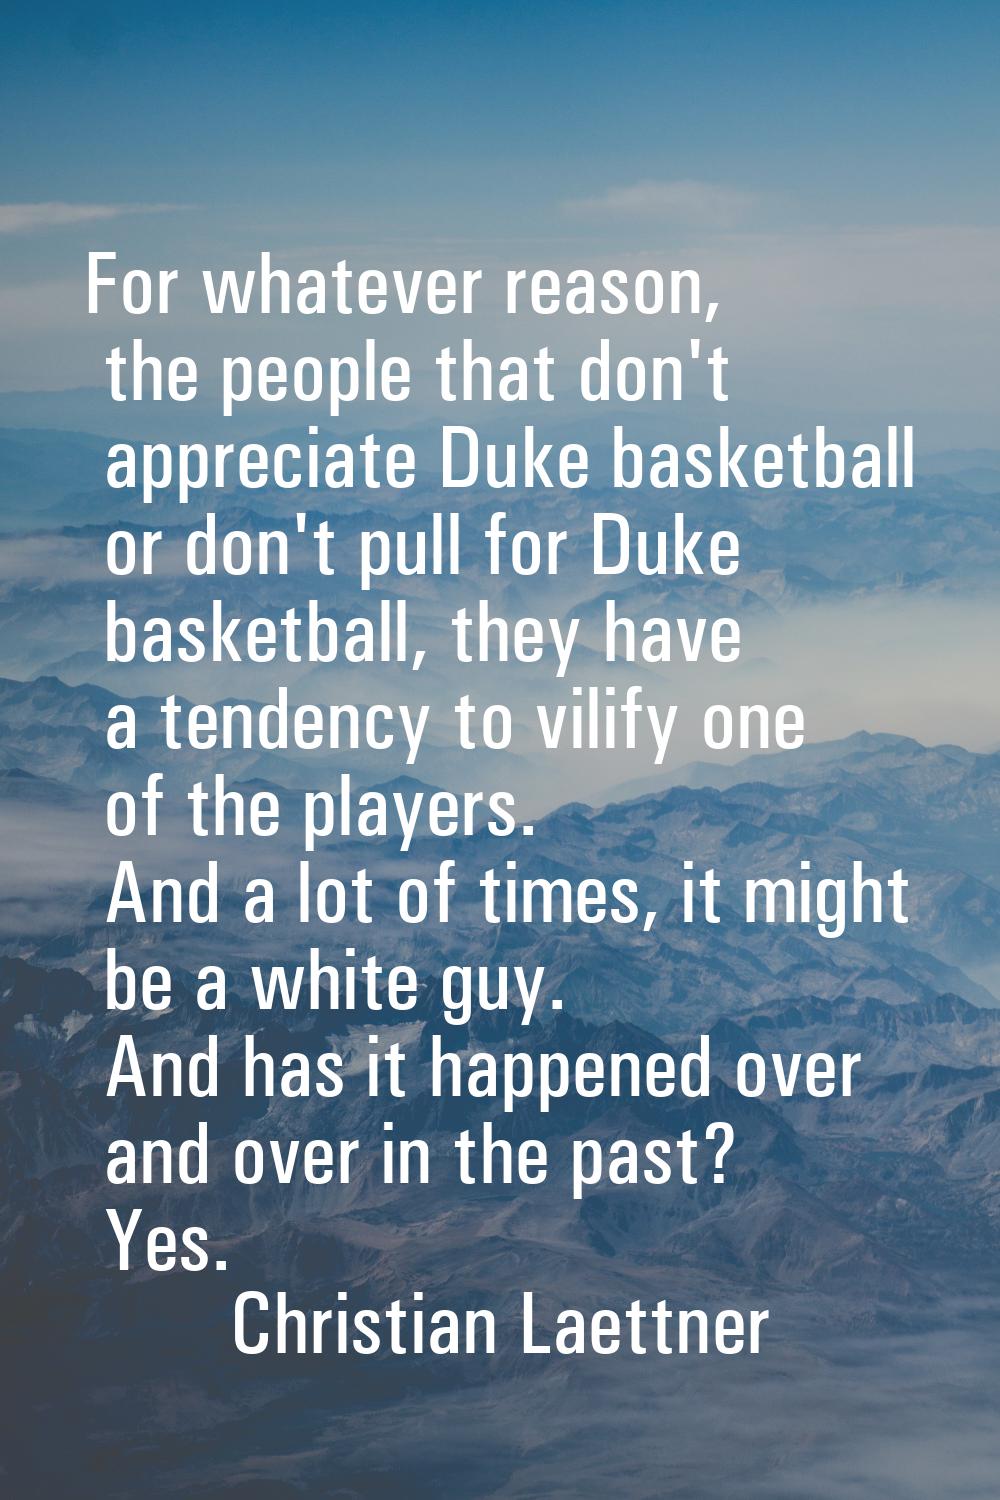 For whatever reason, the people that don't appreciate Duke basketball or don't pull for Duke basket